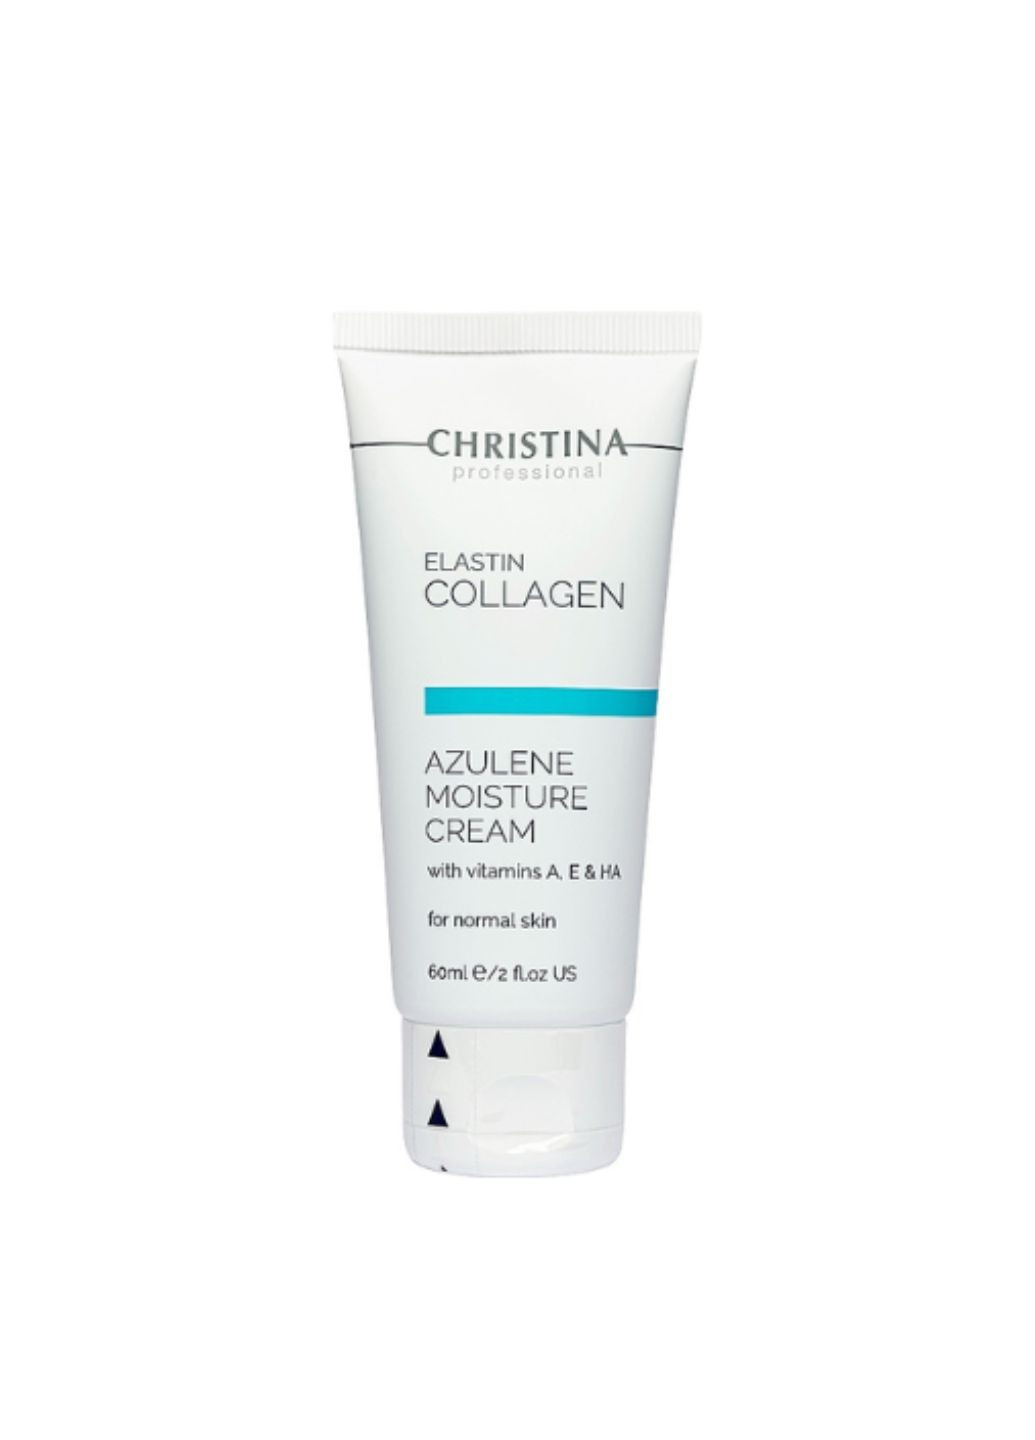 Увлажняющий крем с коллагеном и эластином Elastin Collagen Azulene Moisture Cream Christina